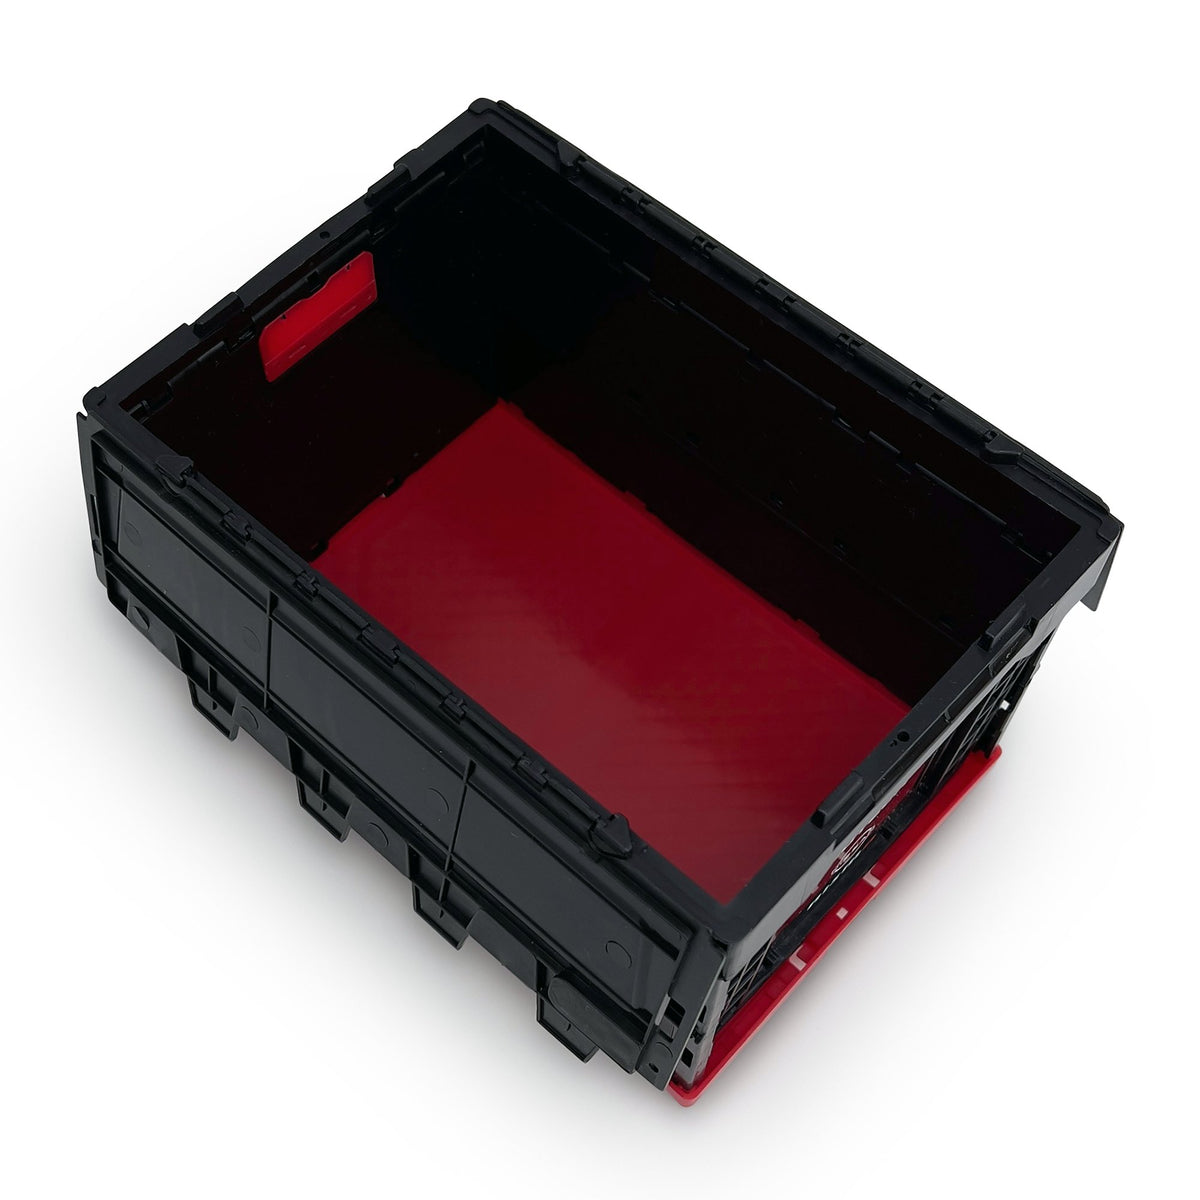 New Nissan Nismo Motorsports Motul Autech Super GT Foldable Container Box 0.7L - Sugoi JDM